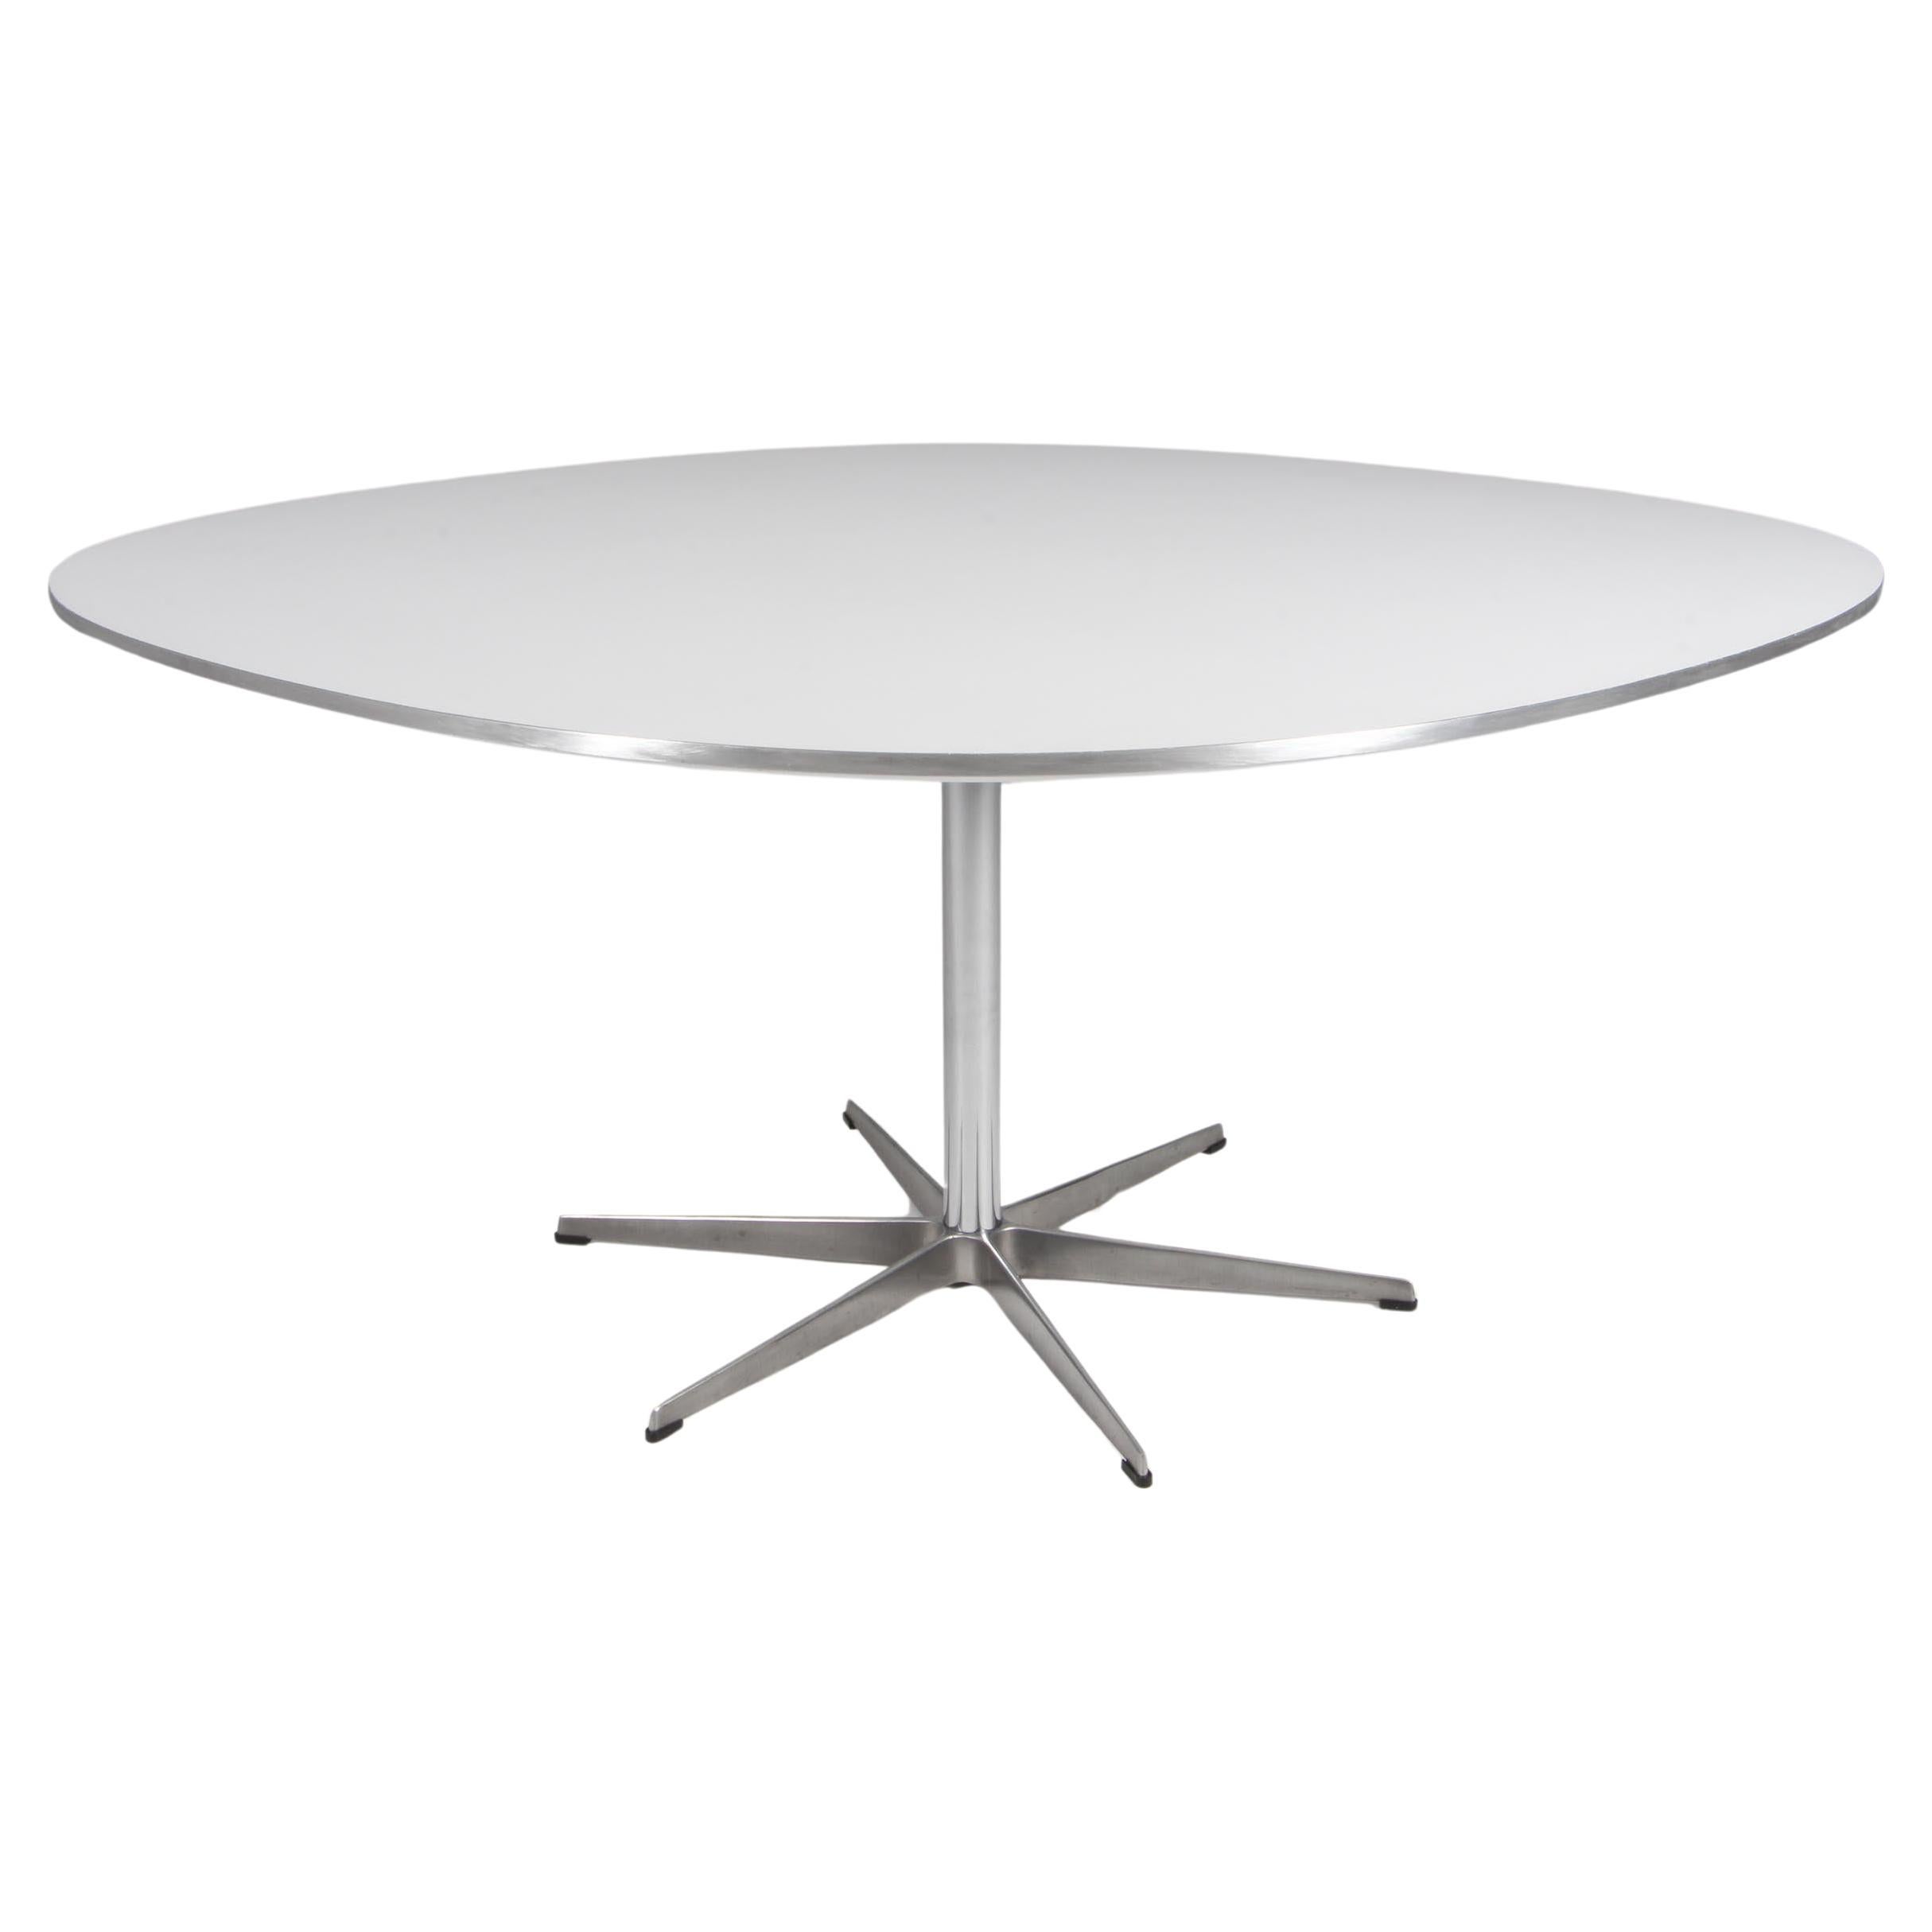 Piet Hein & Arne Jacobsen, supercircular Dining Table